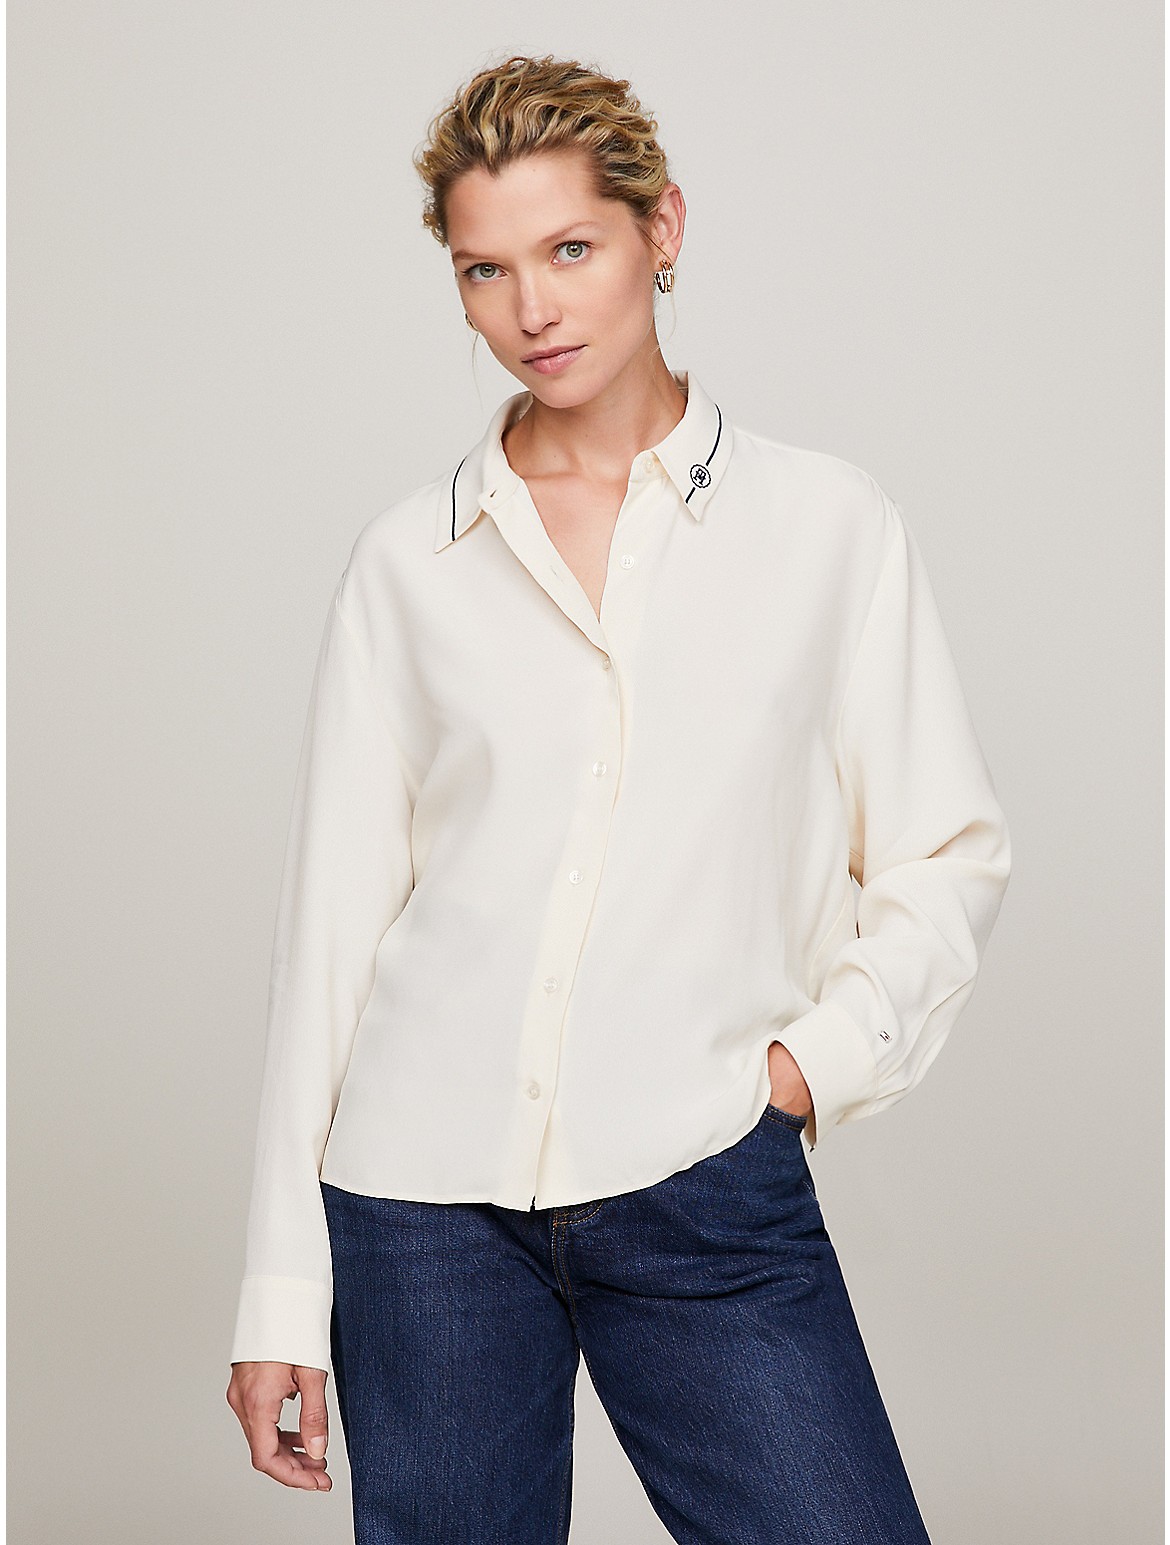 Tommy Hilfiger Women's Monogram Collar Shirt